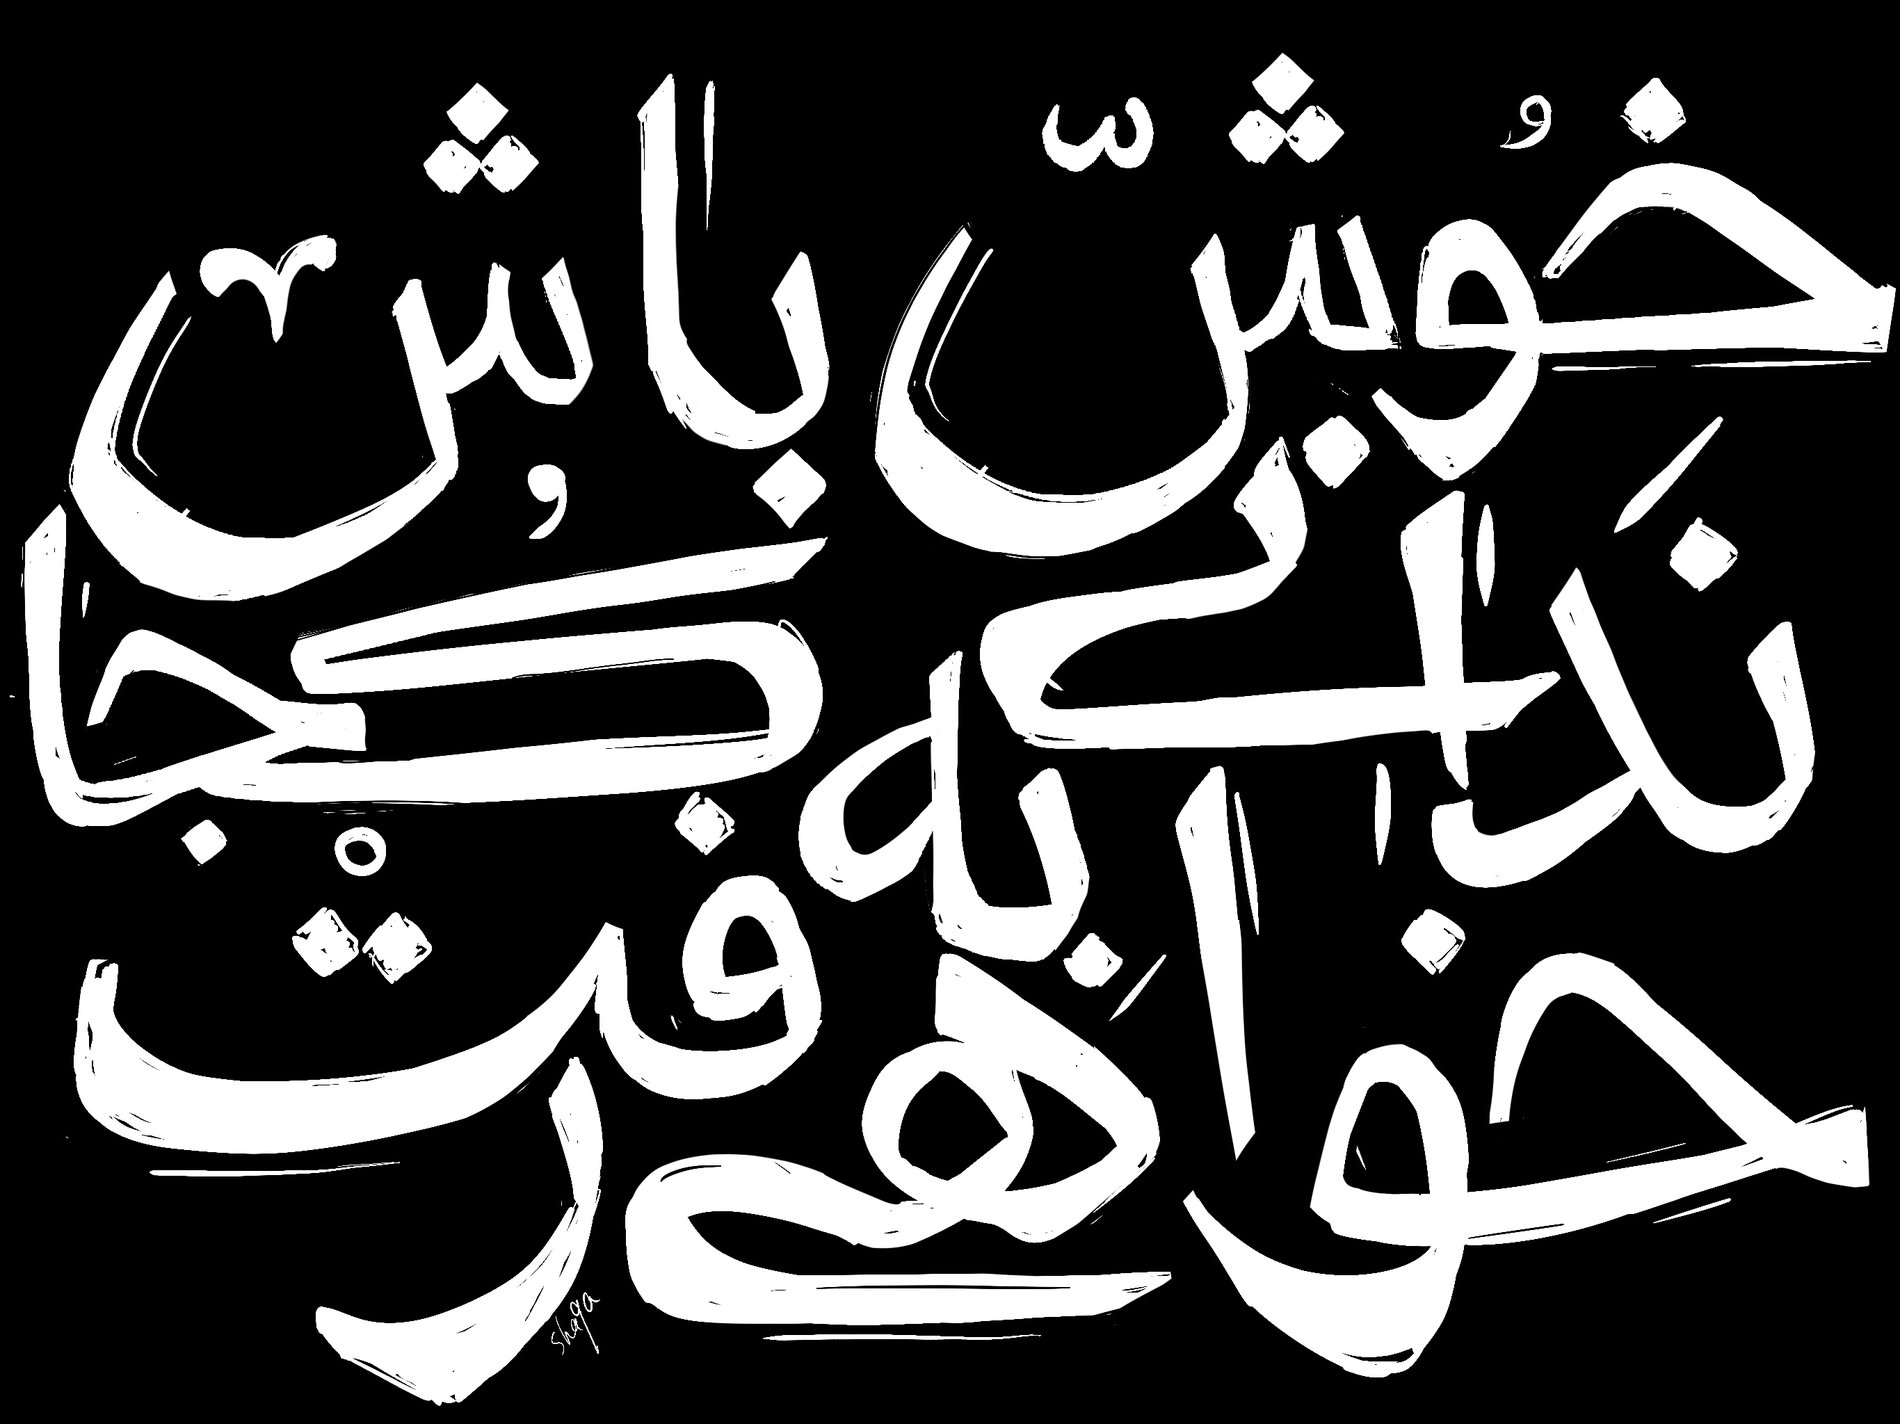 Shaqa-bovand-lettering-3